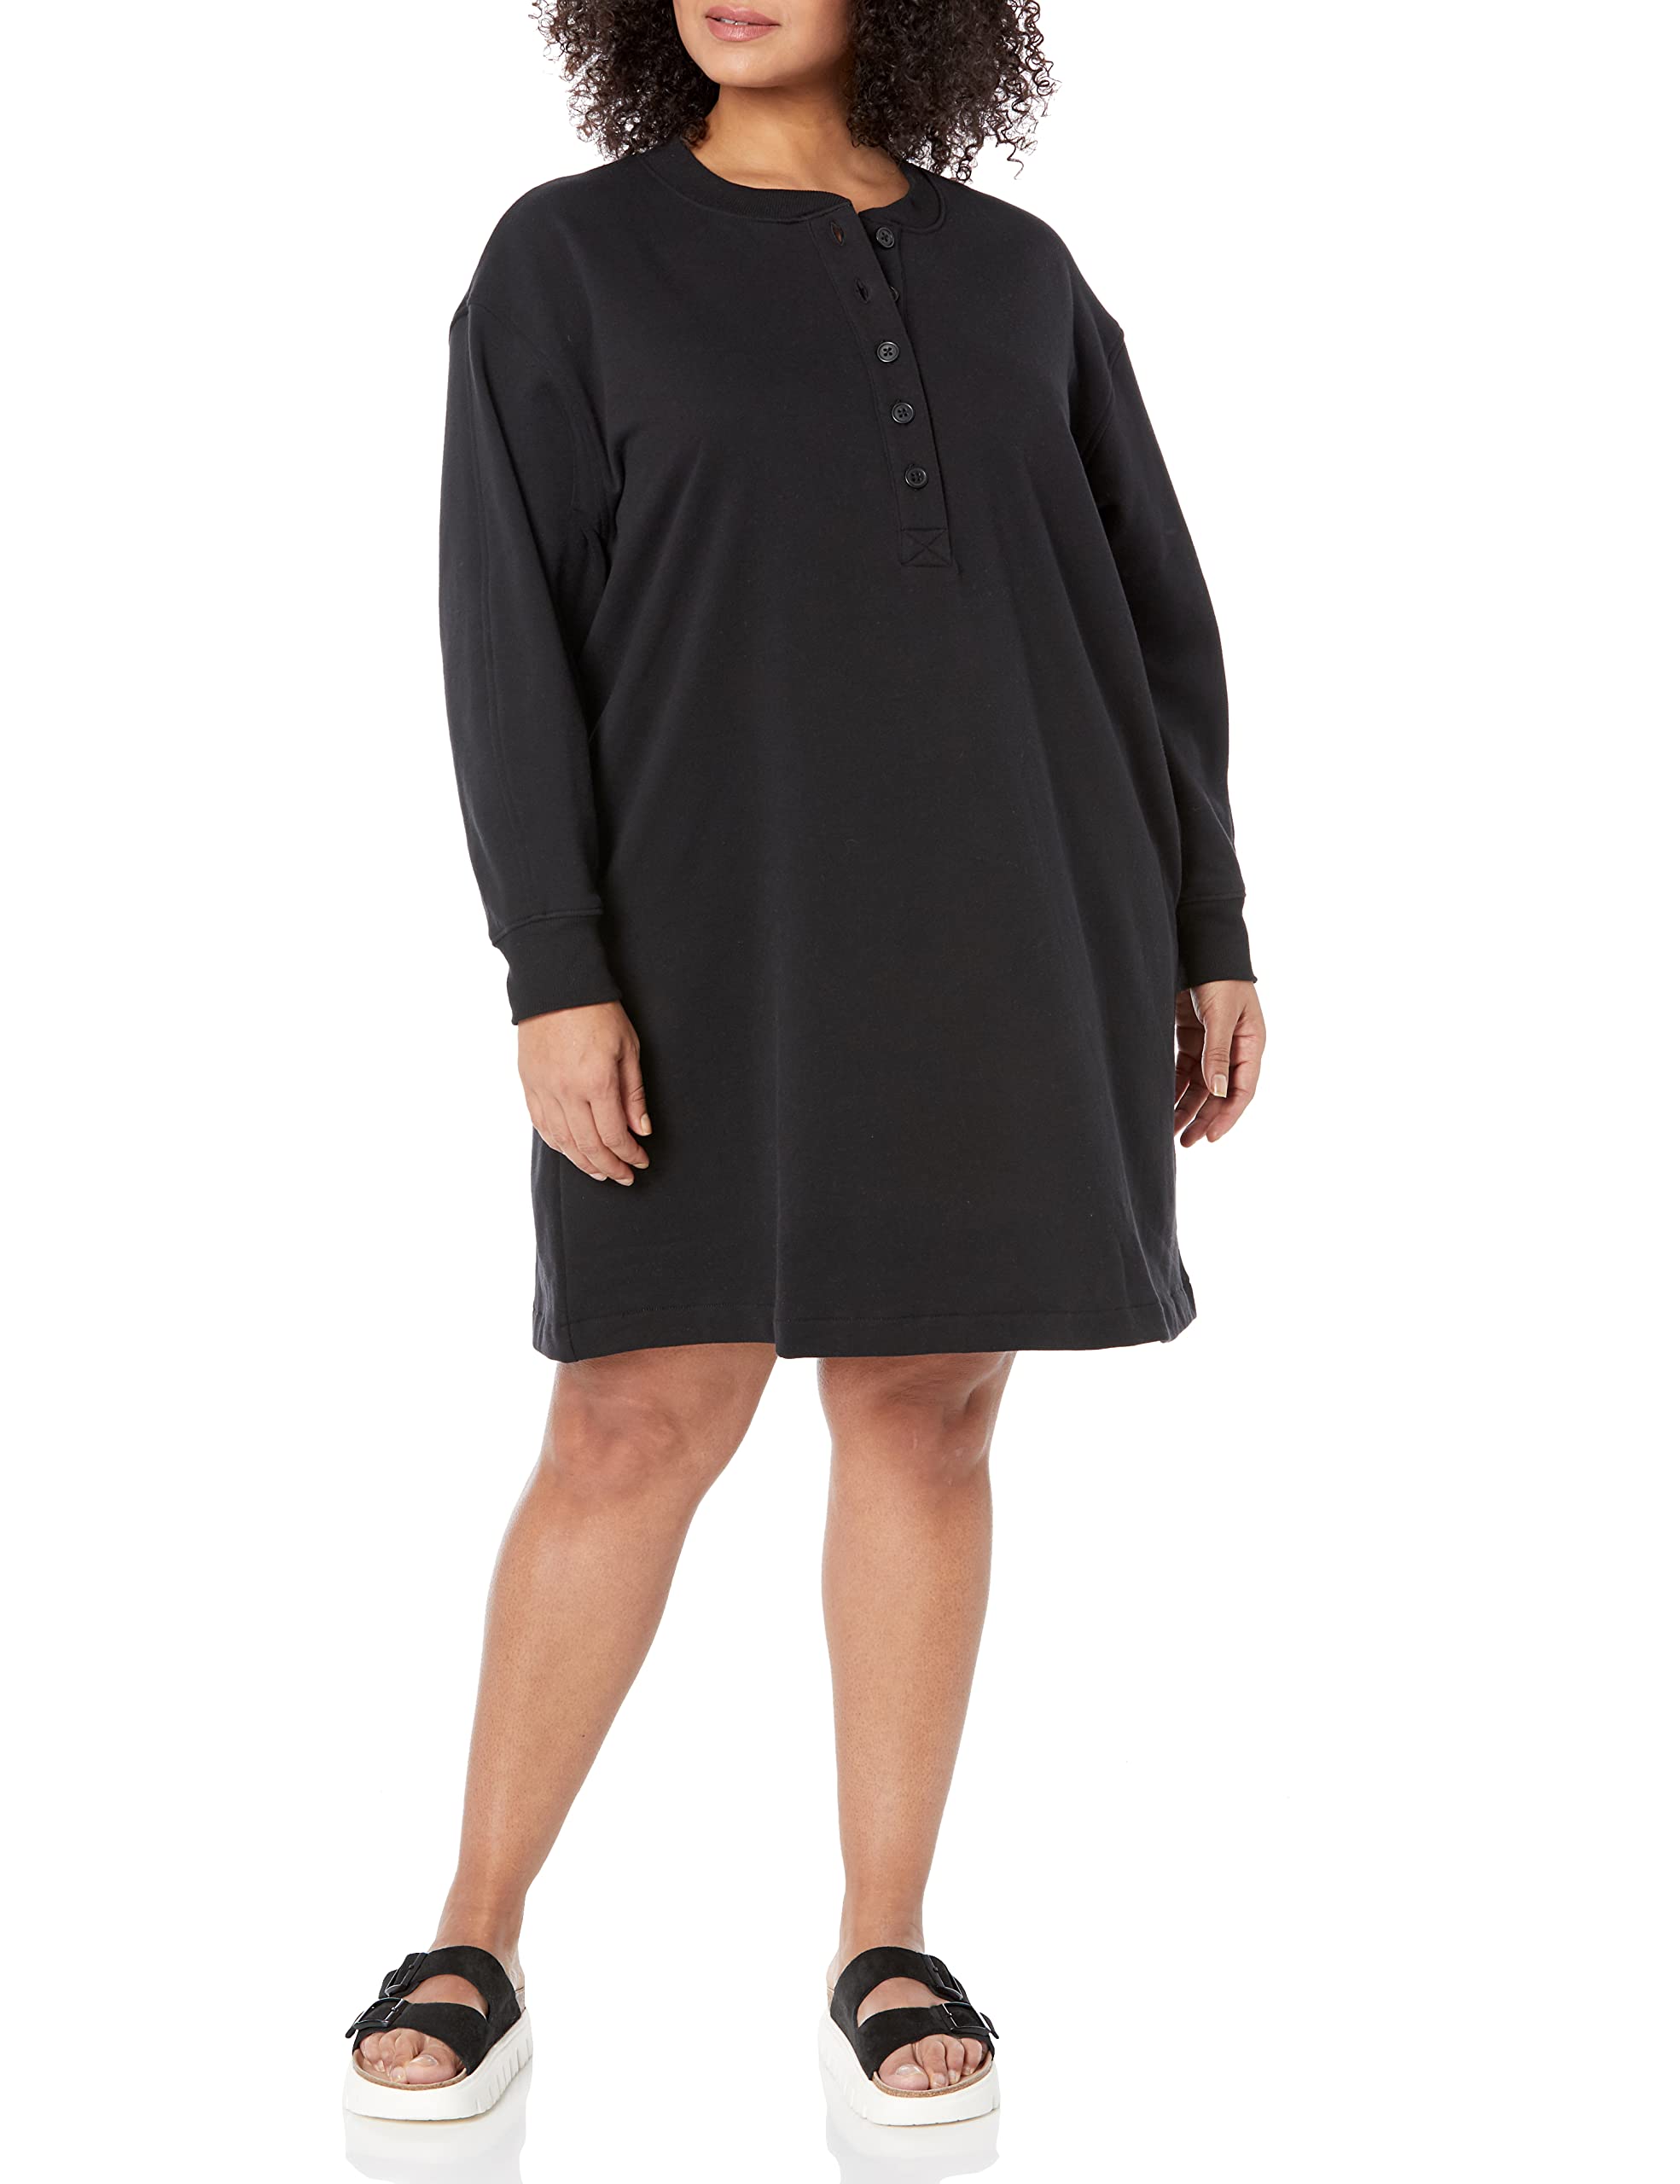 Amazon Essentials Women's Knit Henley Sweatshirt Dress (Available in Plus Size)